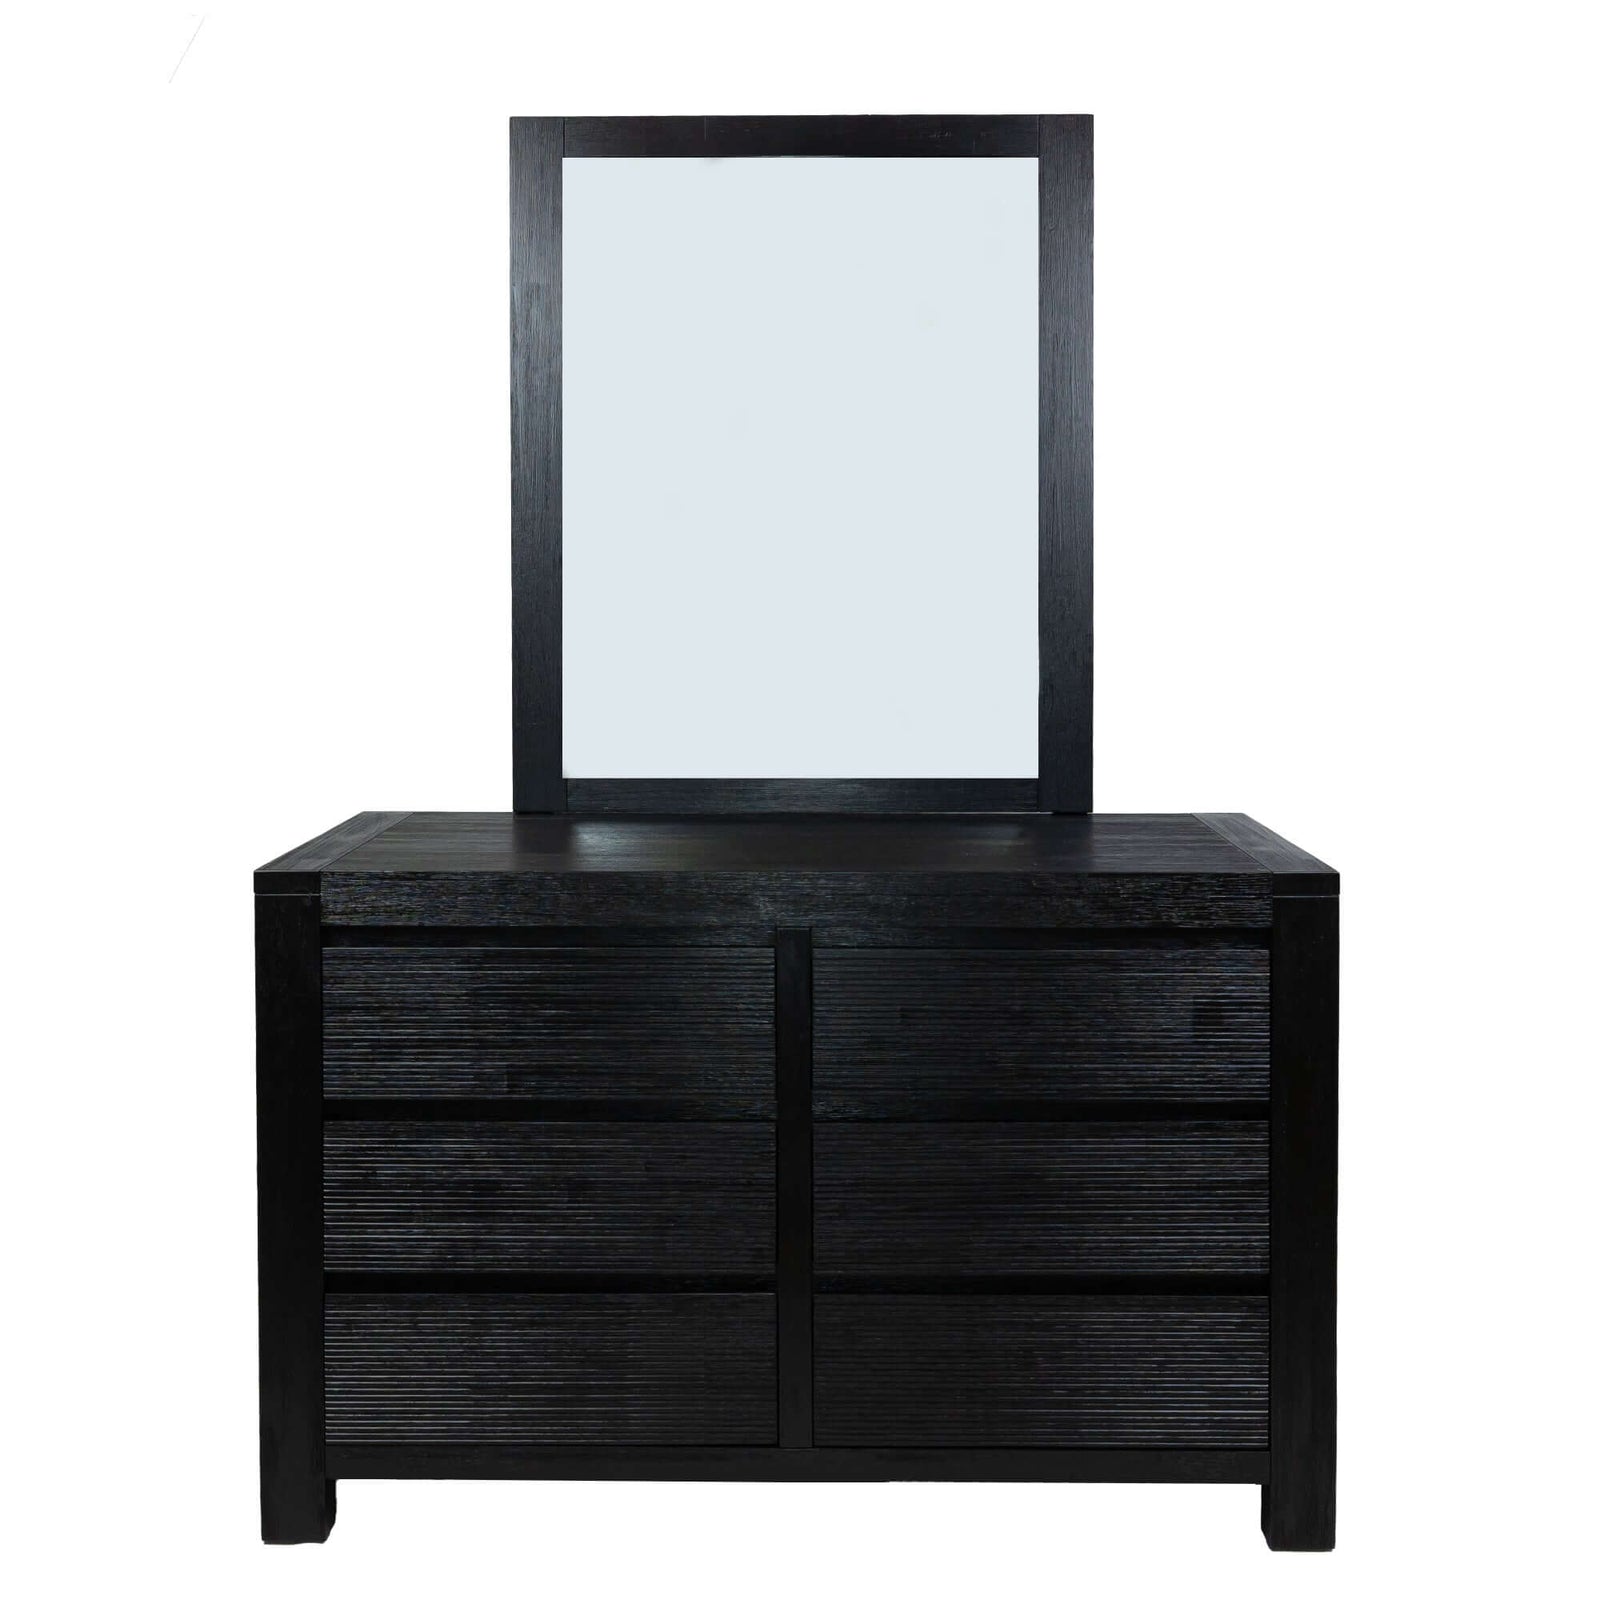 Tofino Dresser Mirror 6 Chest of Drawers Bedroom Storage Cabinet - Black-Upinteriors